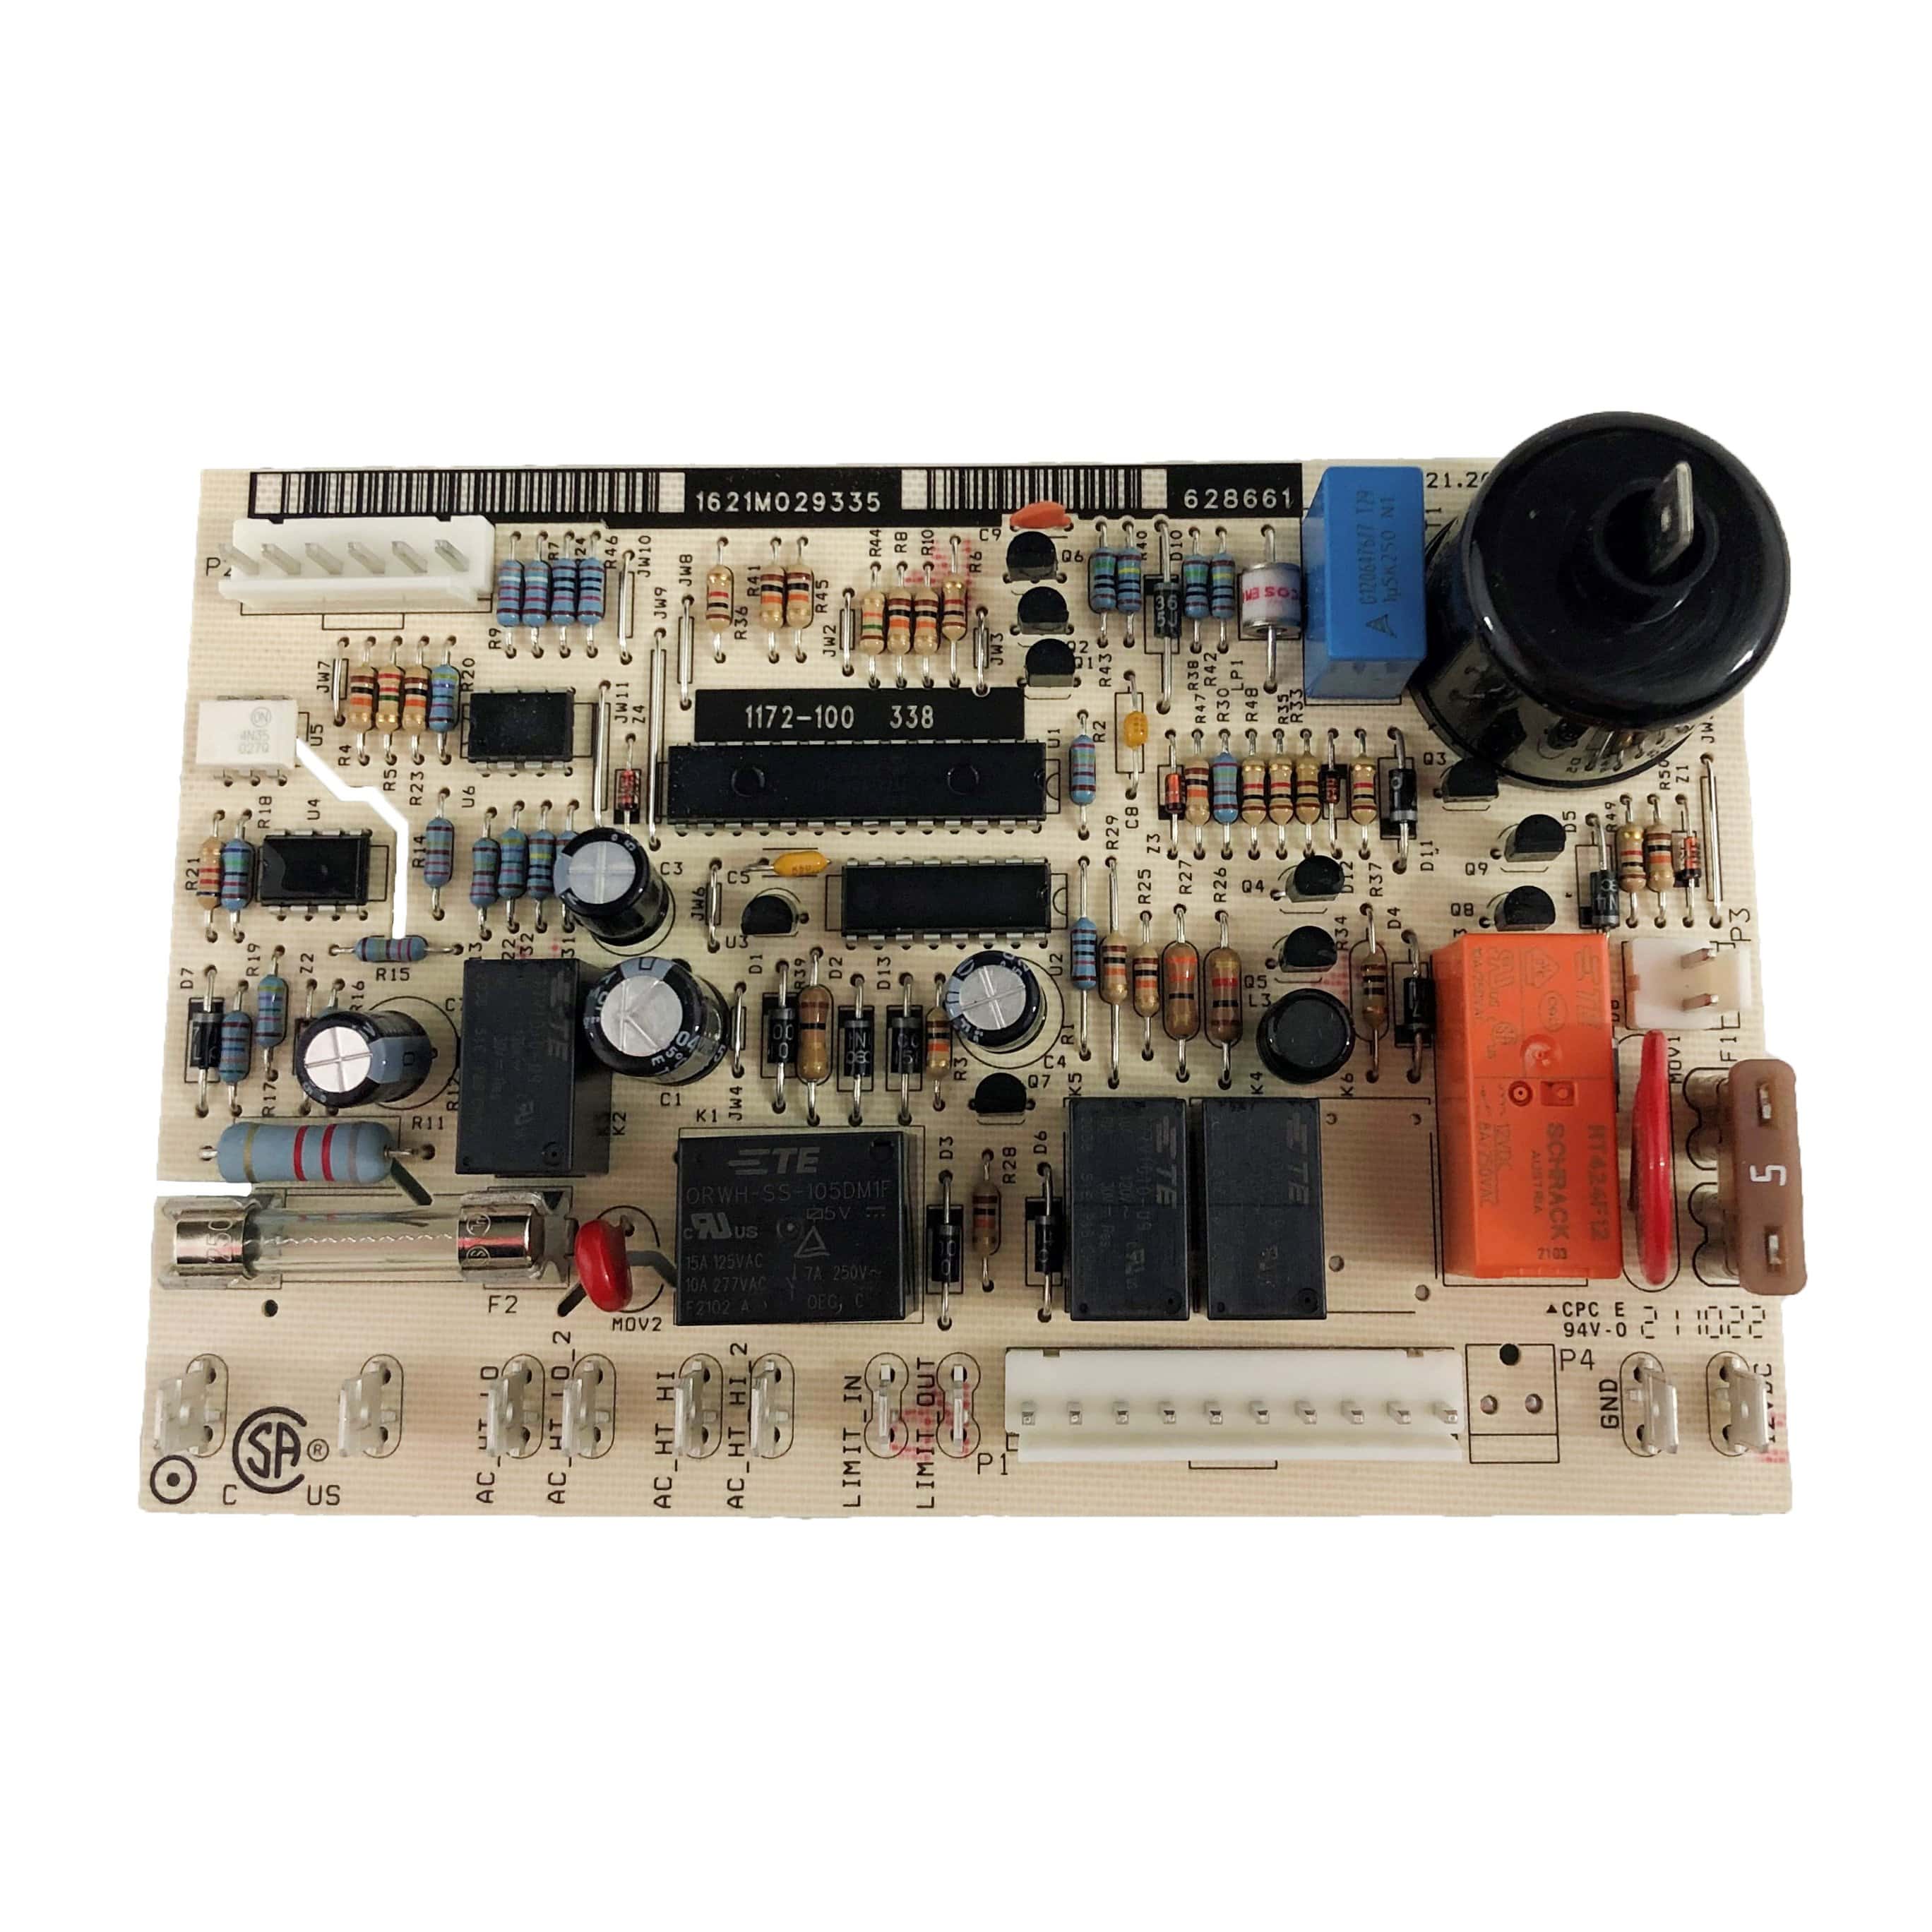 Norcold 628661 2-Way Refrigerator Power Supply Circuit Board